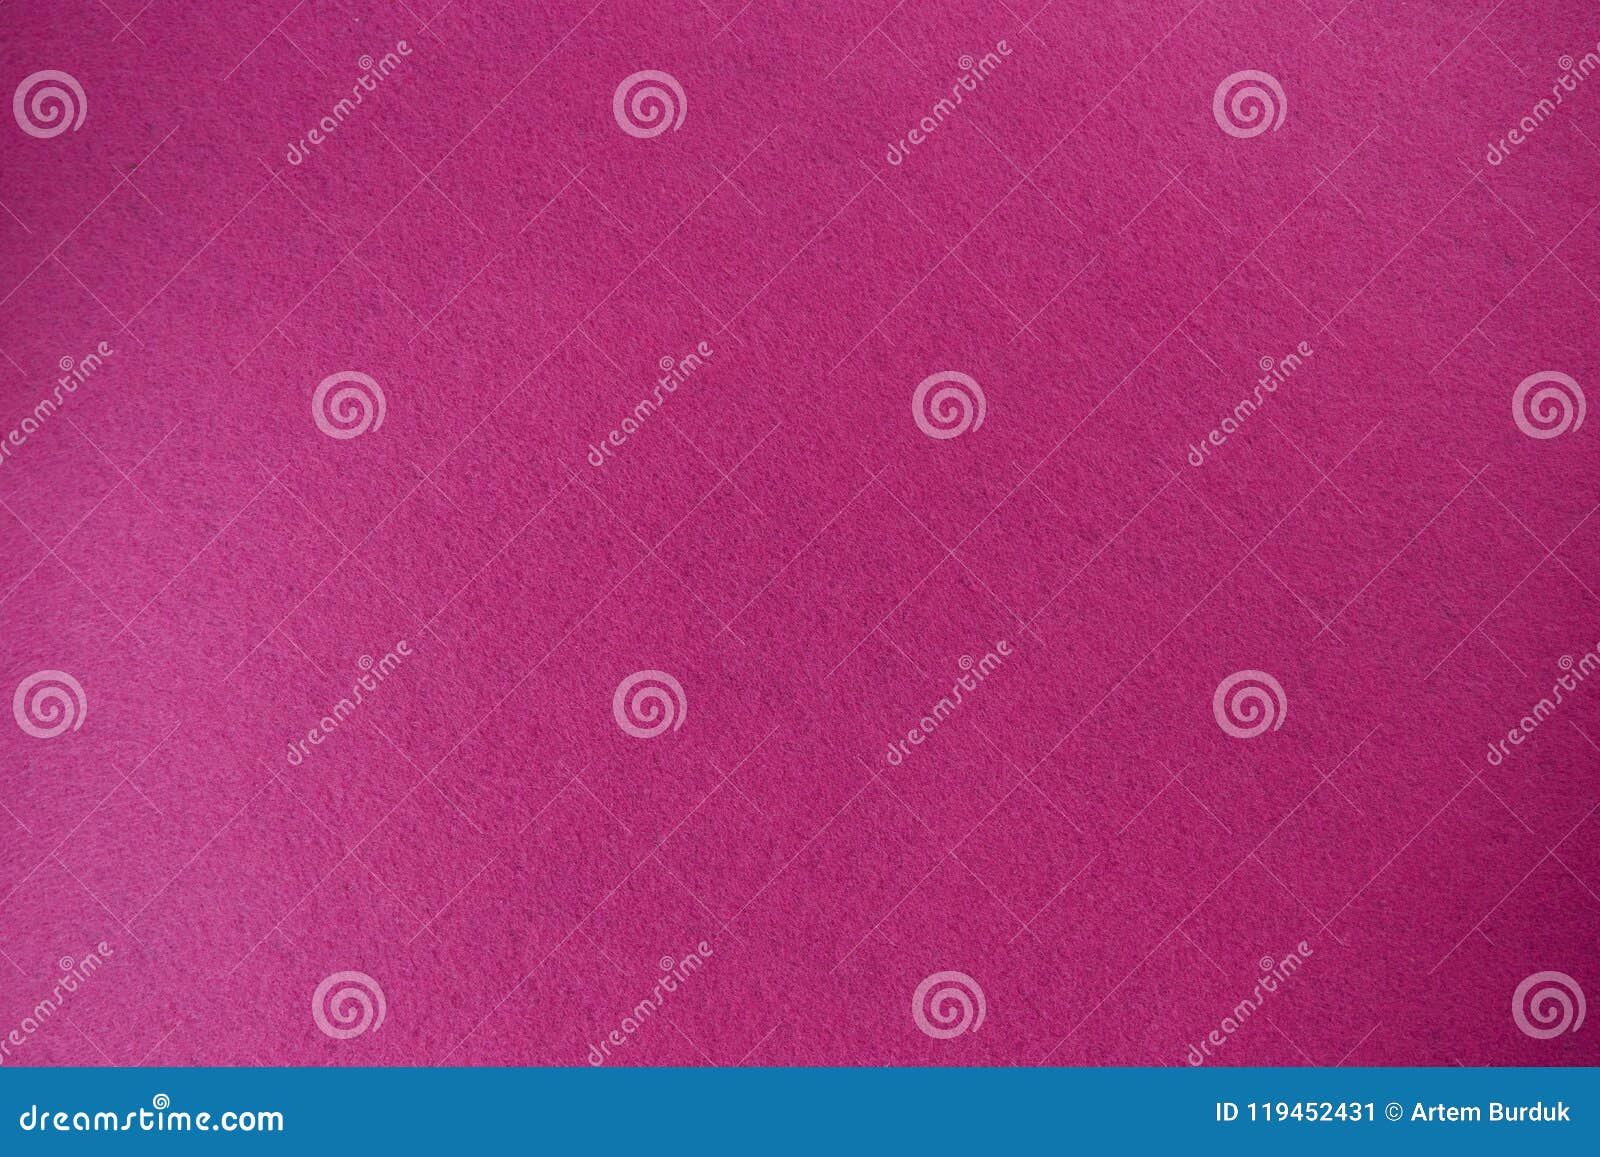 Background Pink Felt High Resolution Photo Stock Photo 507045949